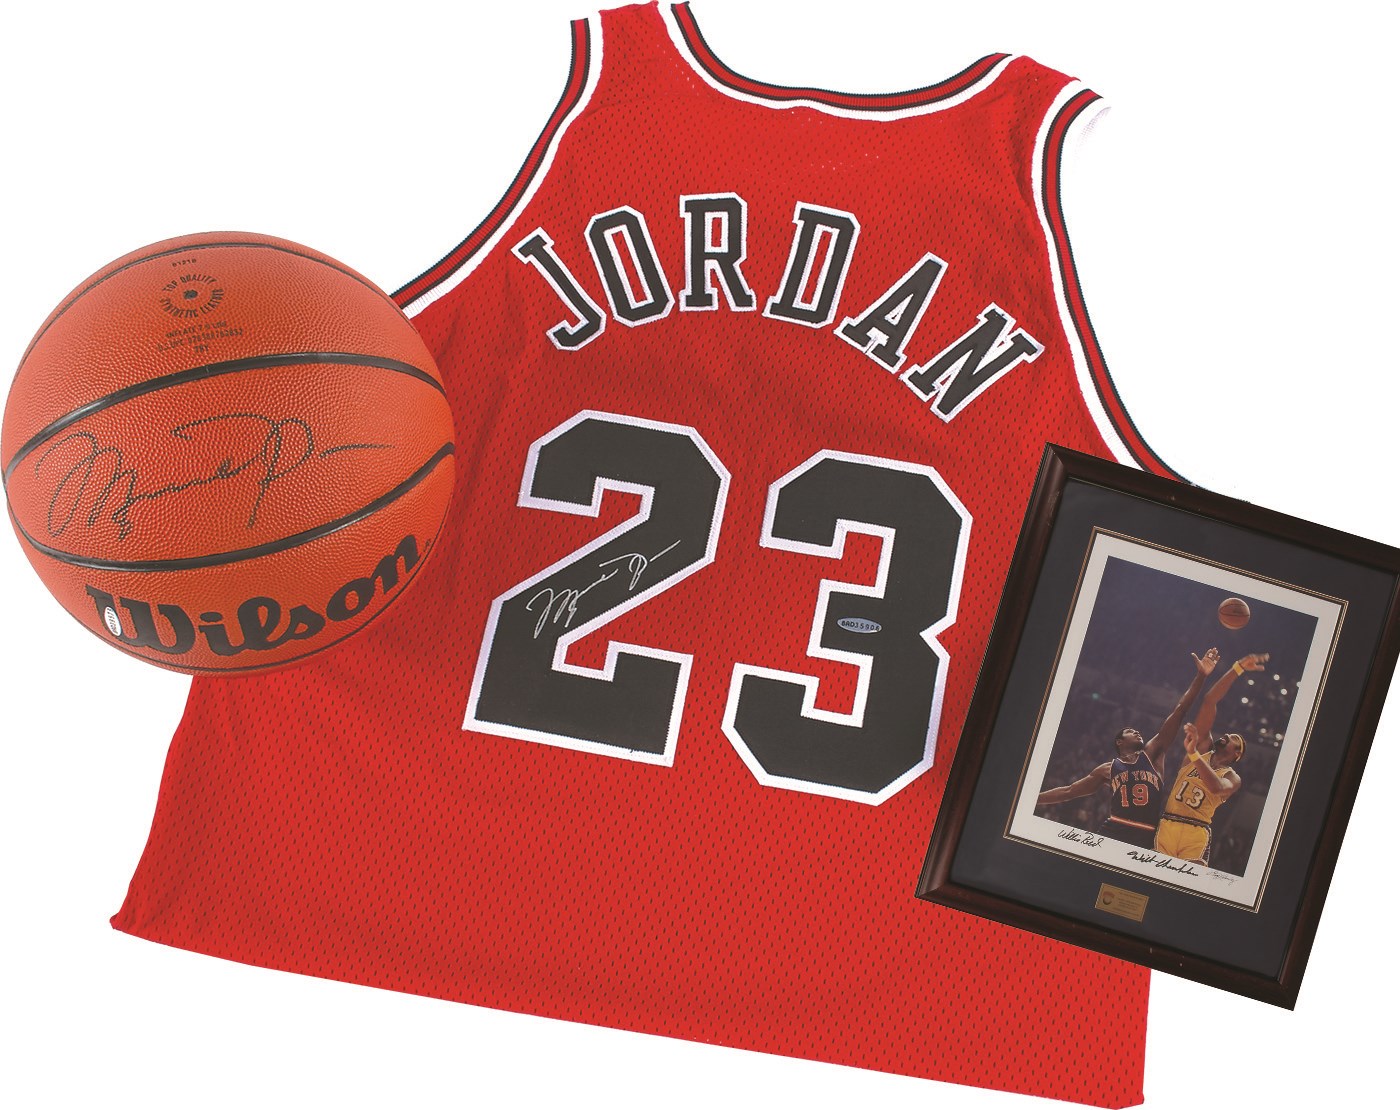 Basketball - Michael Jordan & Wilt Chamberlain Autograph Collection - Jersey, Ball, Photos (UDA)